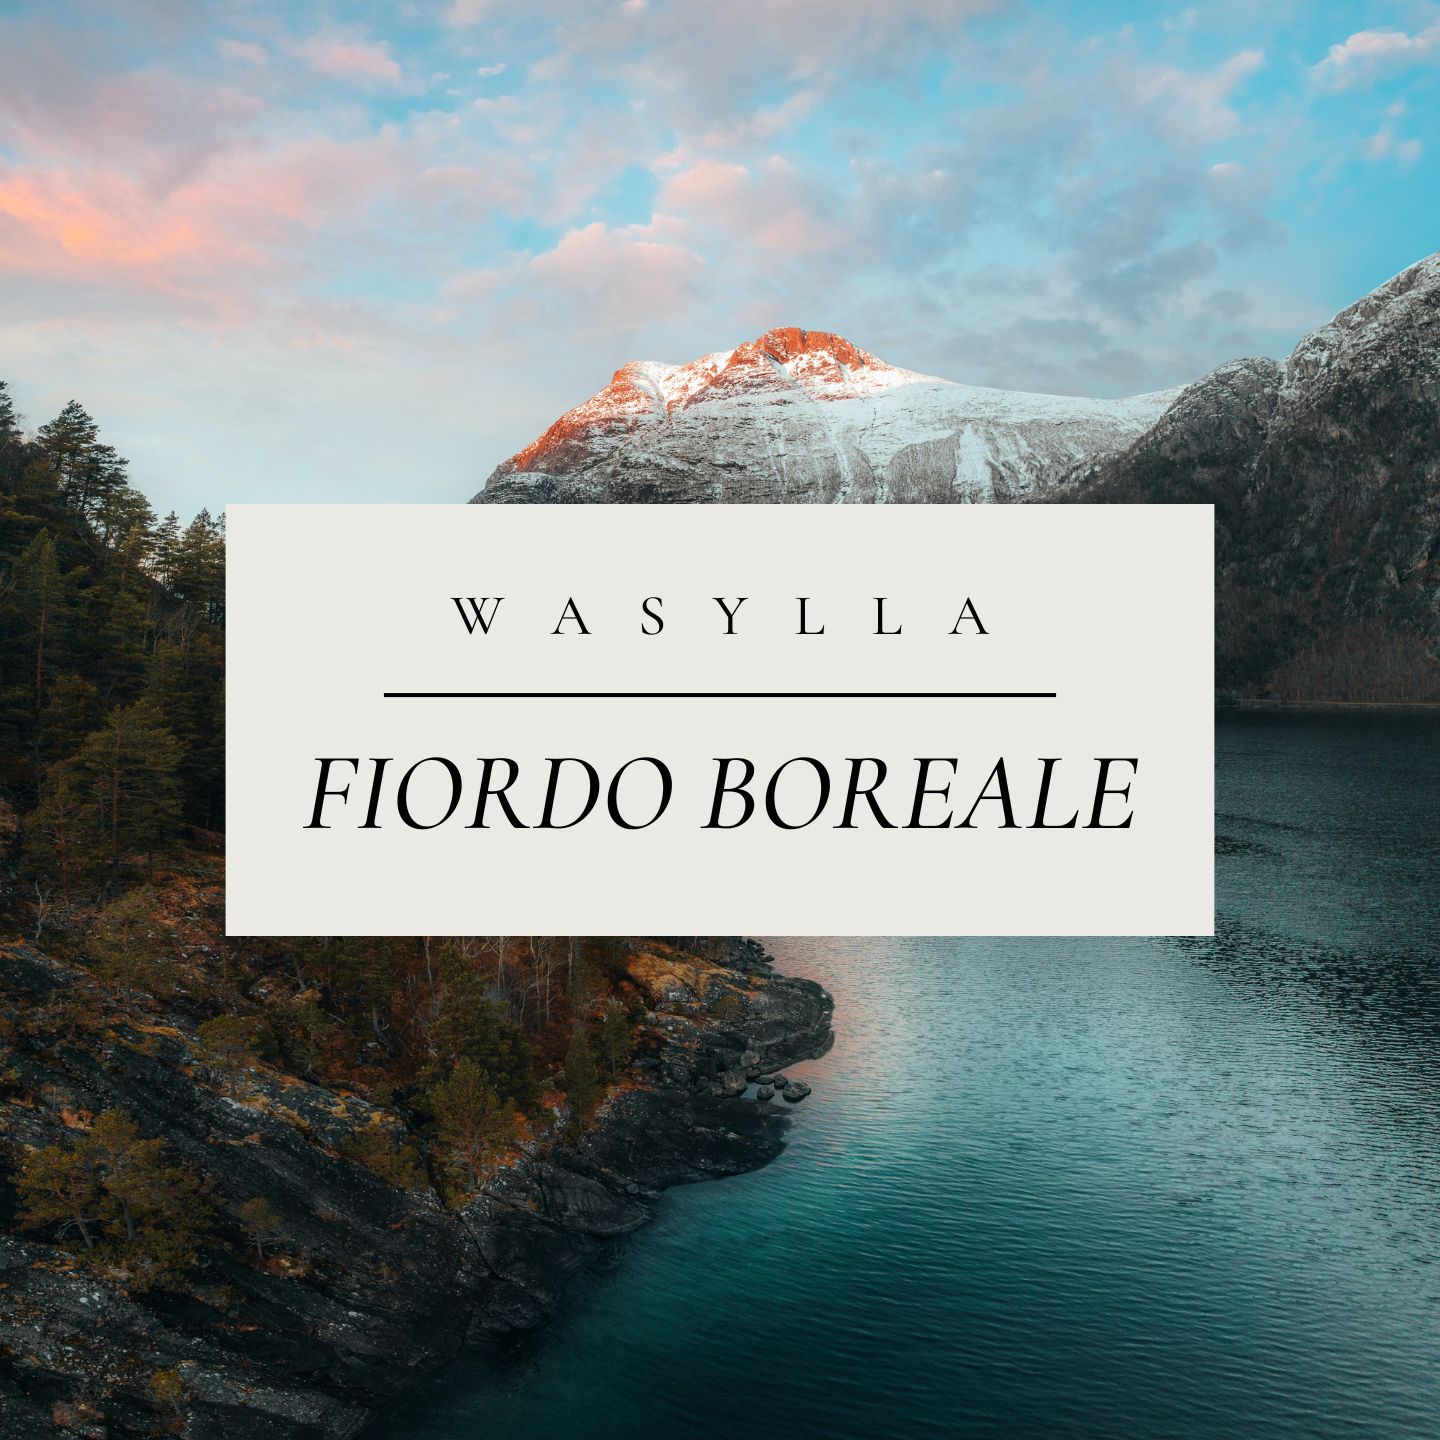 Fiordo Boreale